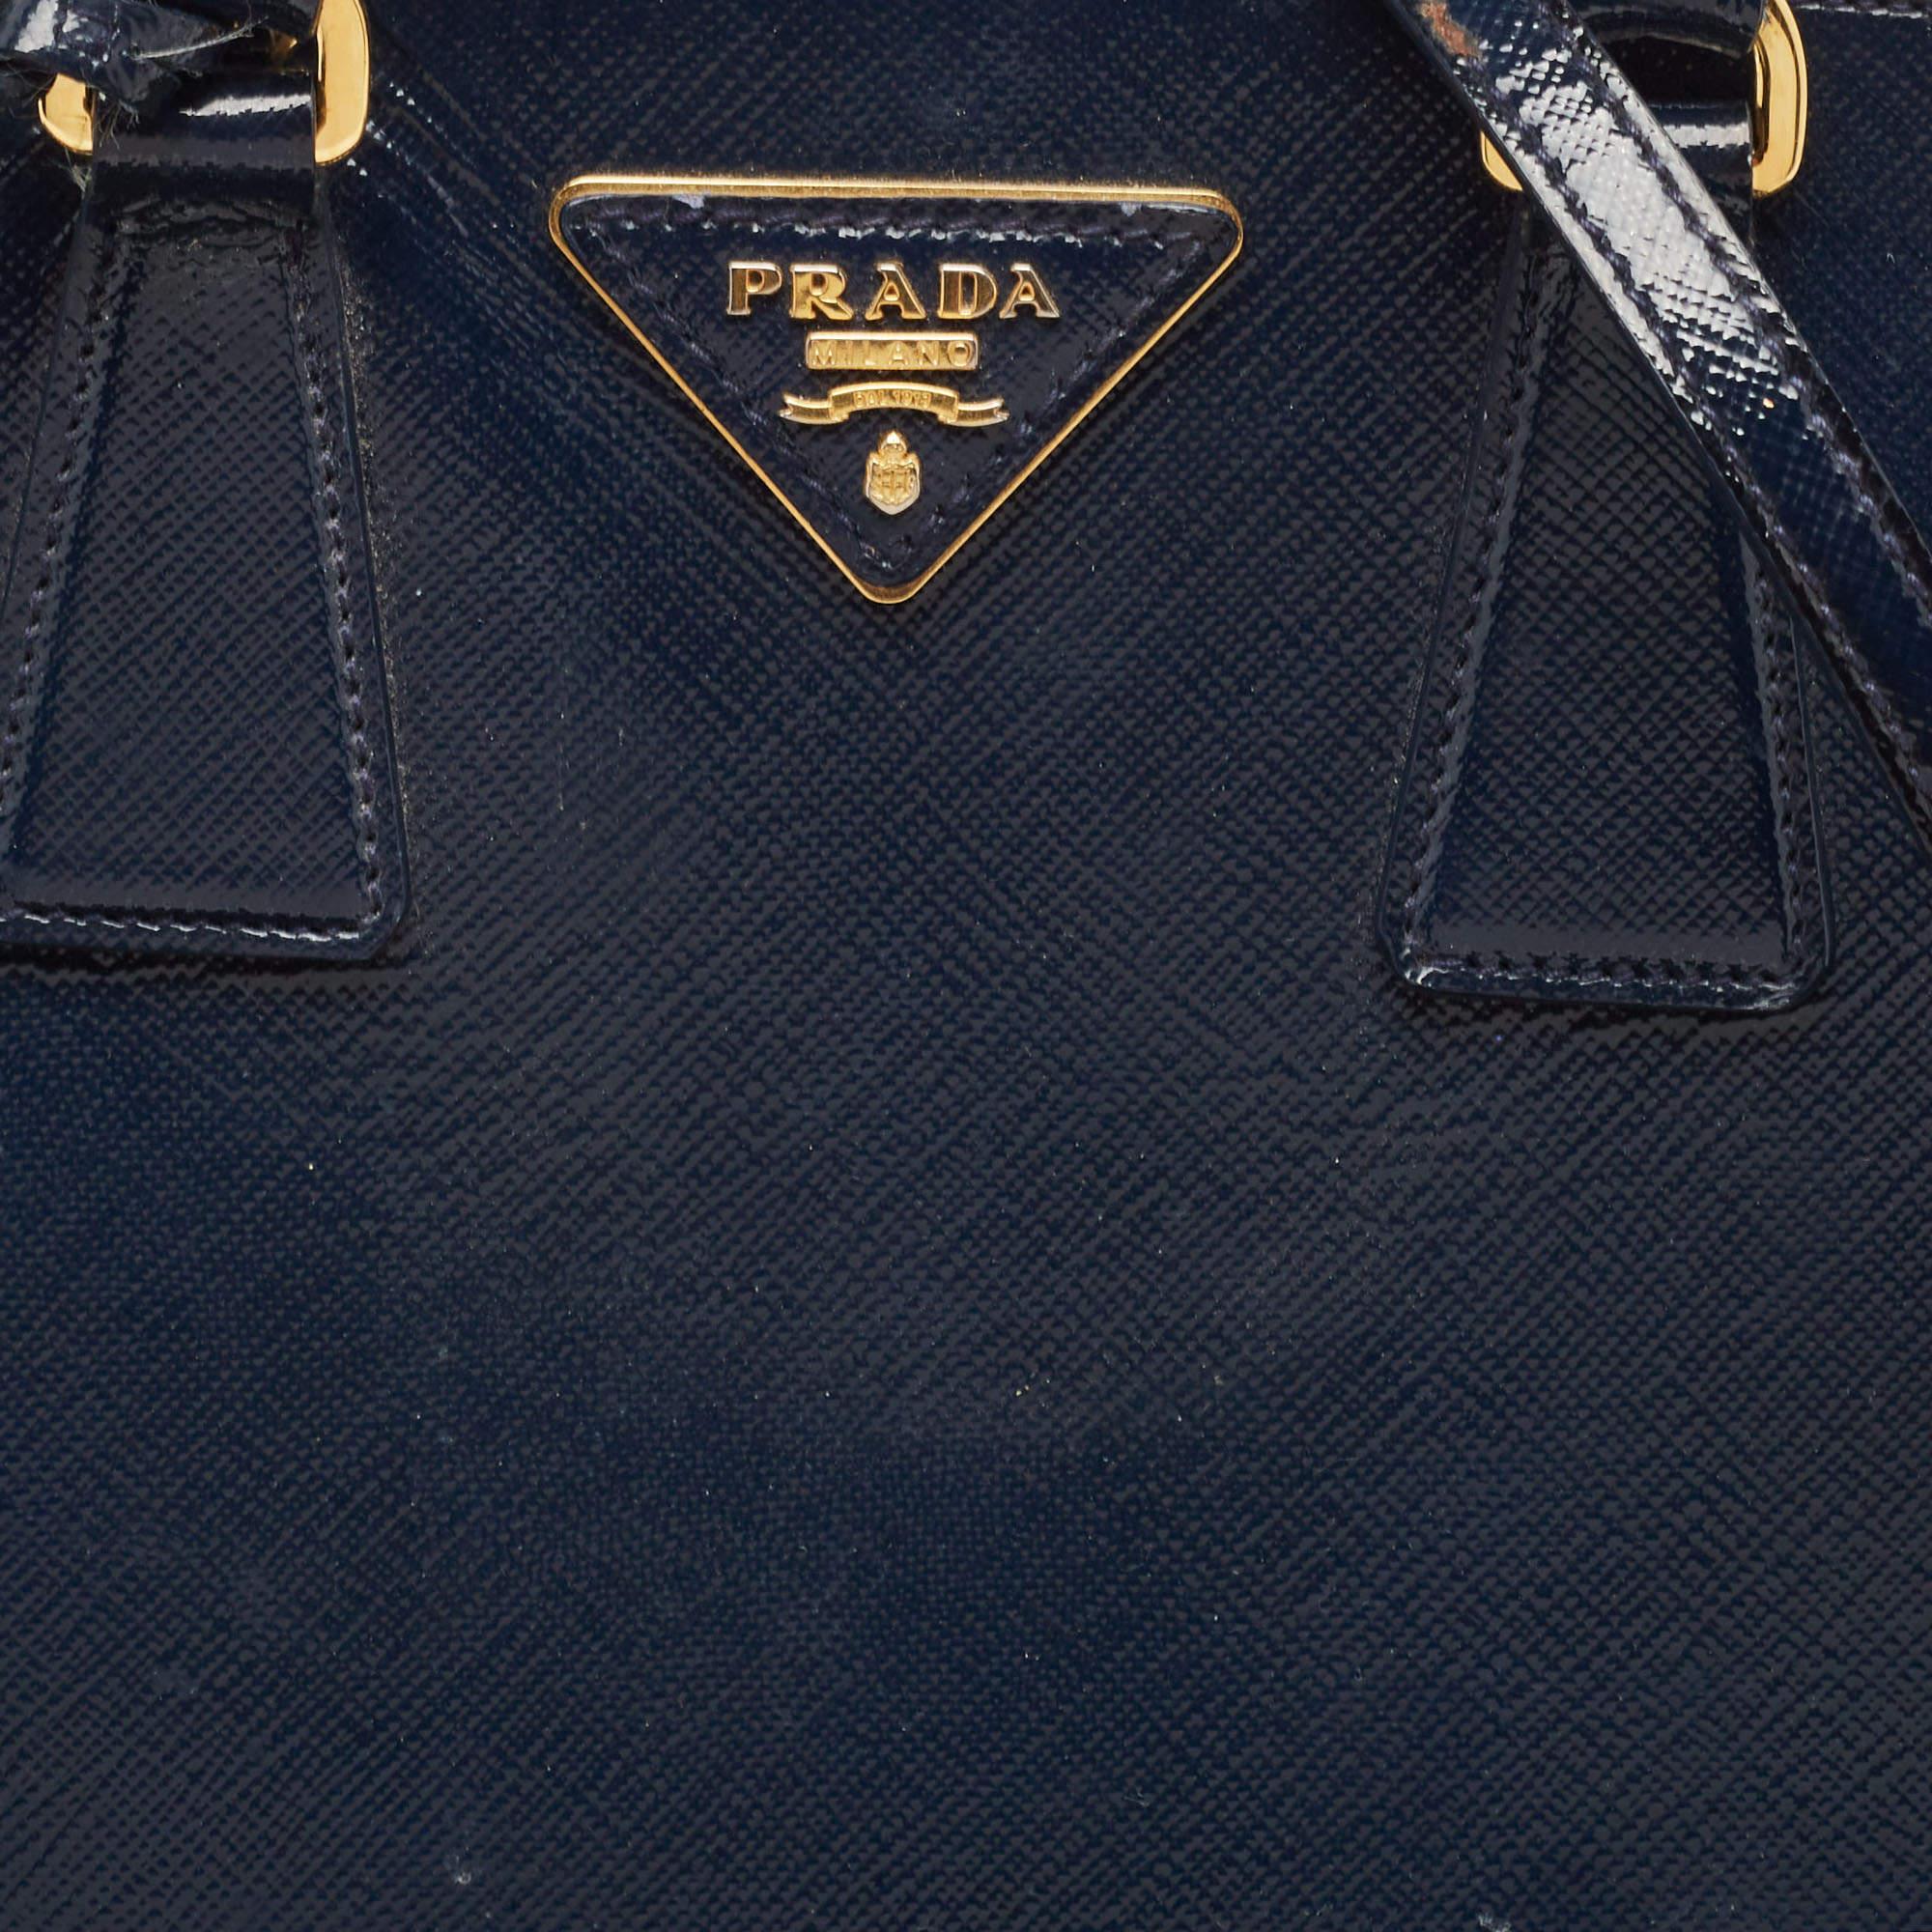 Prada Navy Blue Saffiano Patent Leather Small Promenade Satchel For Sale 4